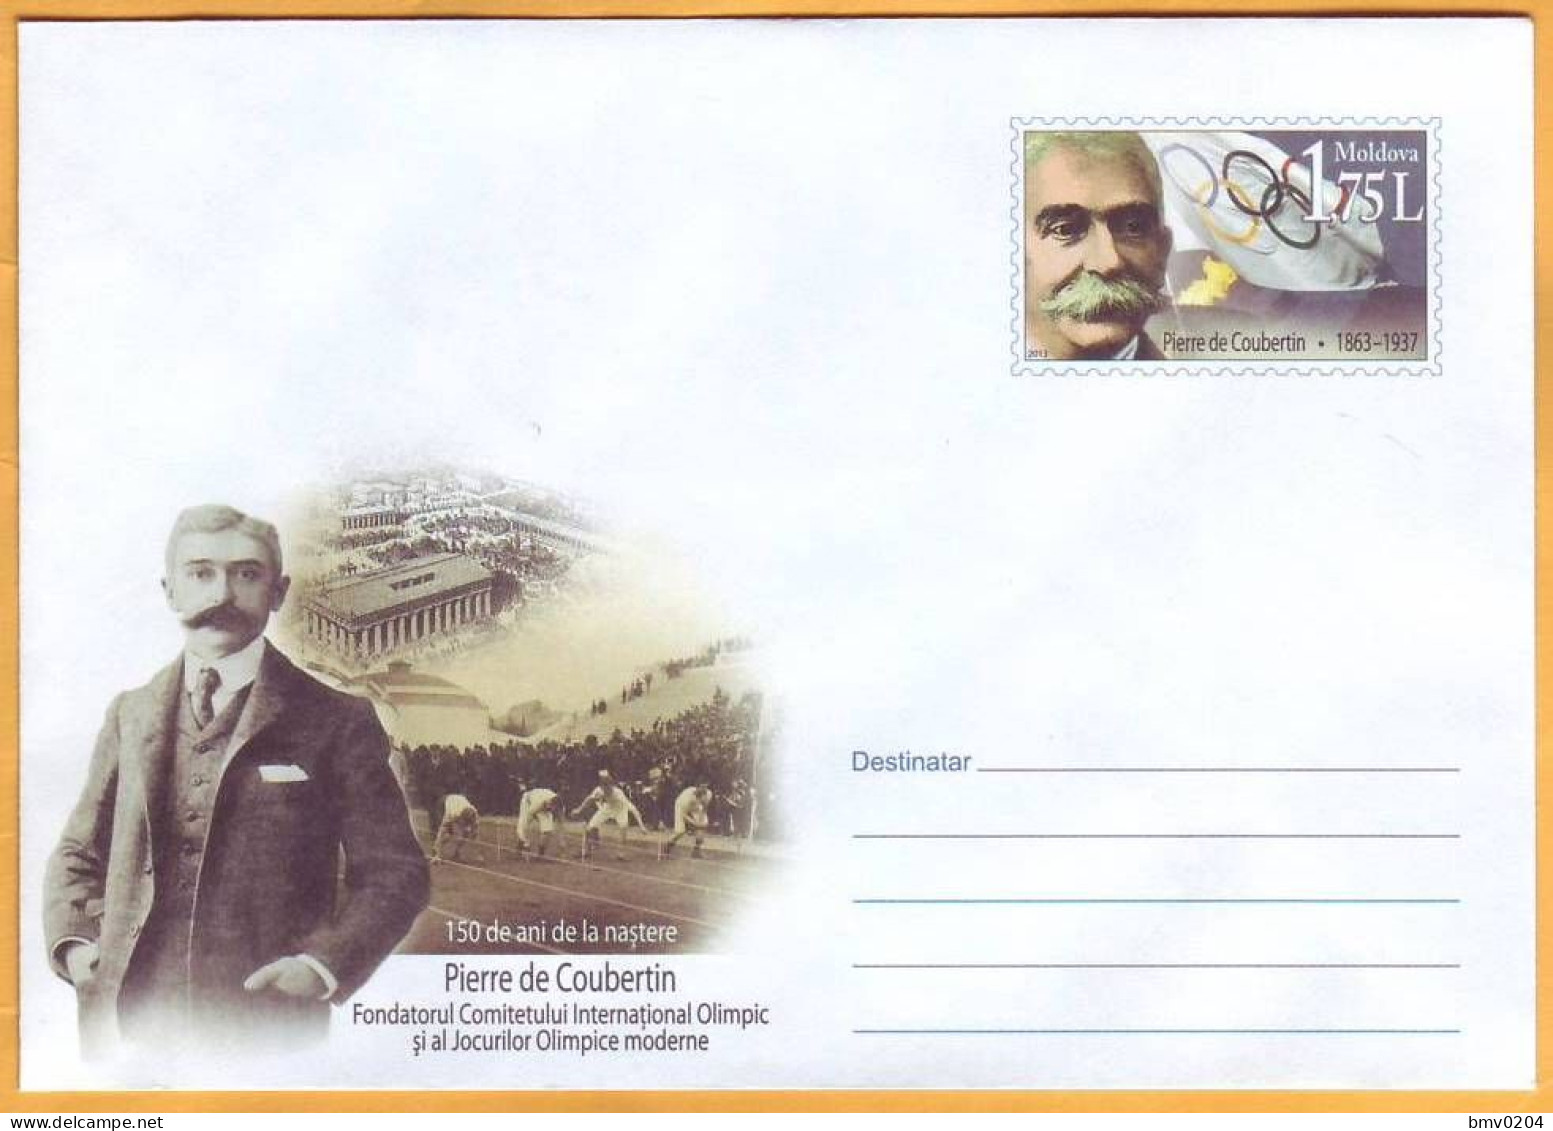 2013 Moldova  Moldavie  Moldau  Pierre De Coubertin. Olympic Games. 150 Years. Organizer. - Moldavia